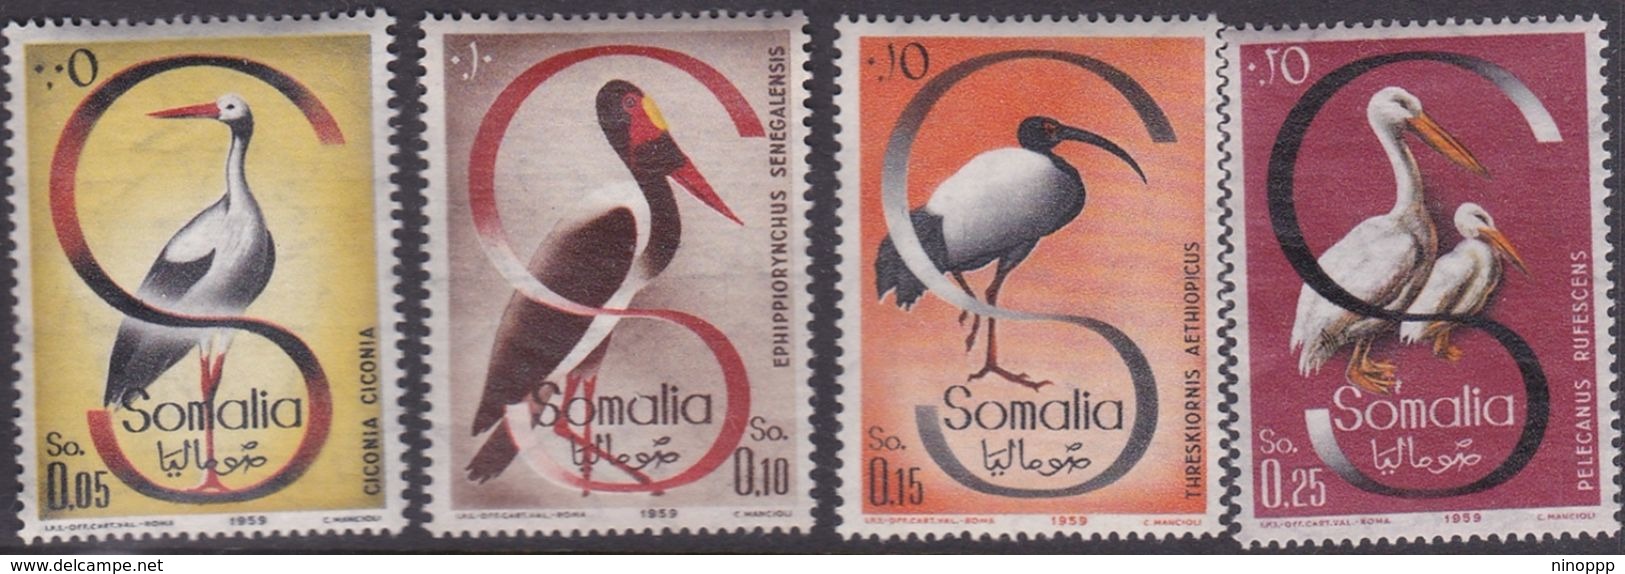 Somalia Scott 230-233 1959 Birds, Mint Never Hinged - Somalia (AFIS)